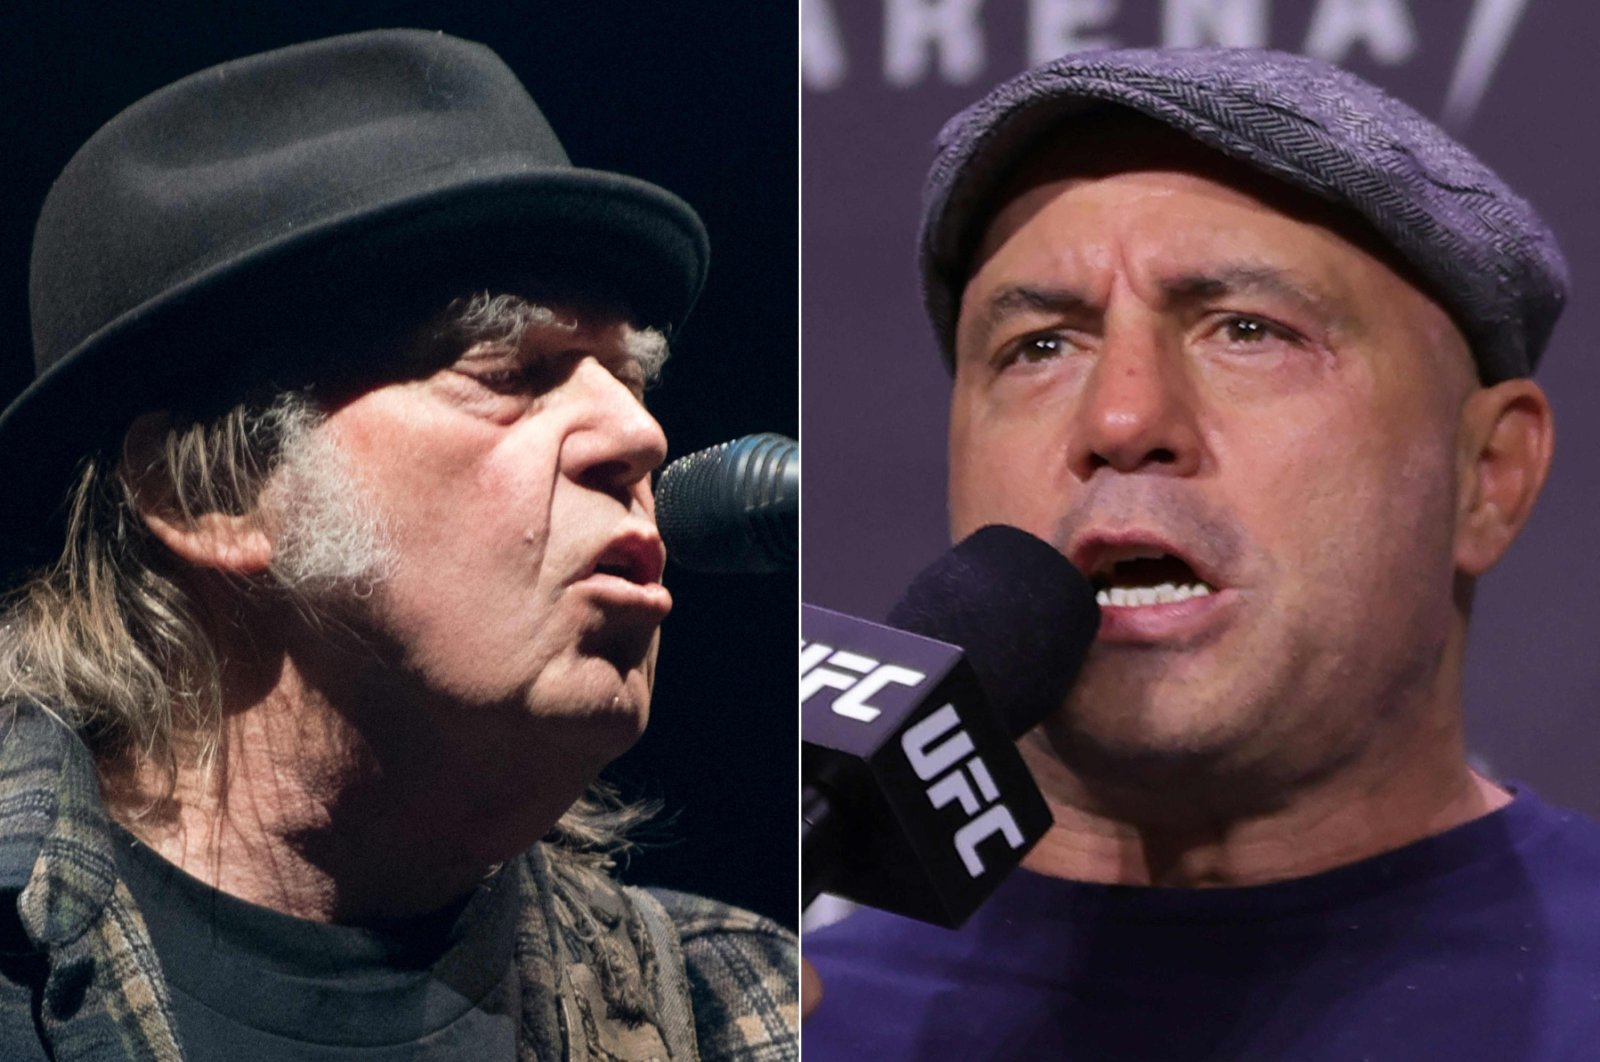 Spotify memilih Joe Rogan daripada Neil Young di baris informasi yang salah tentang COVID